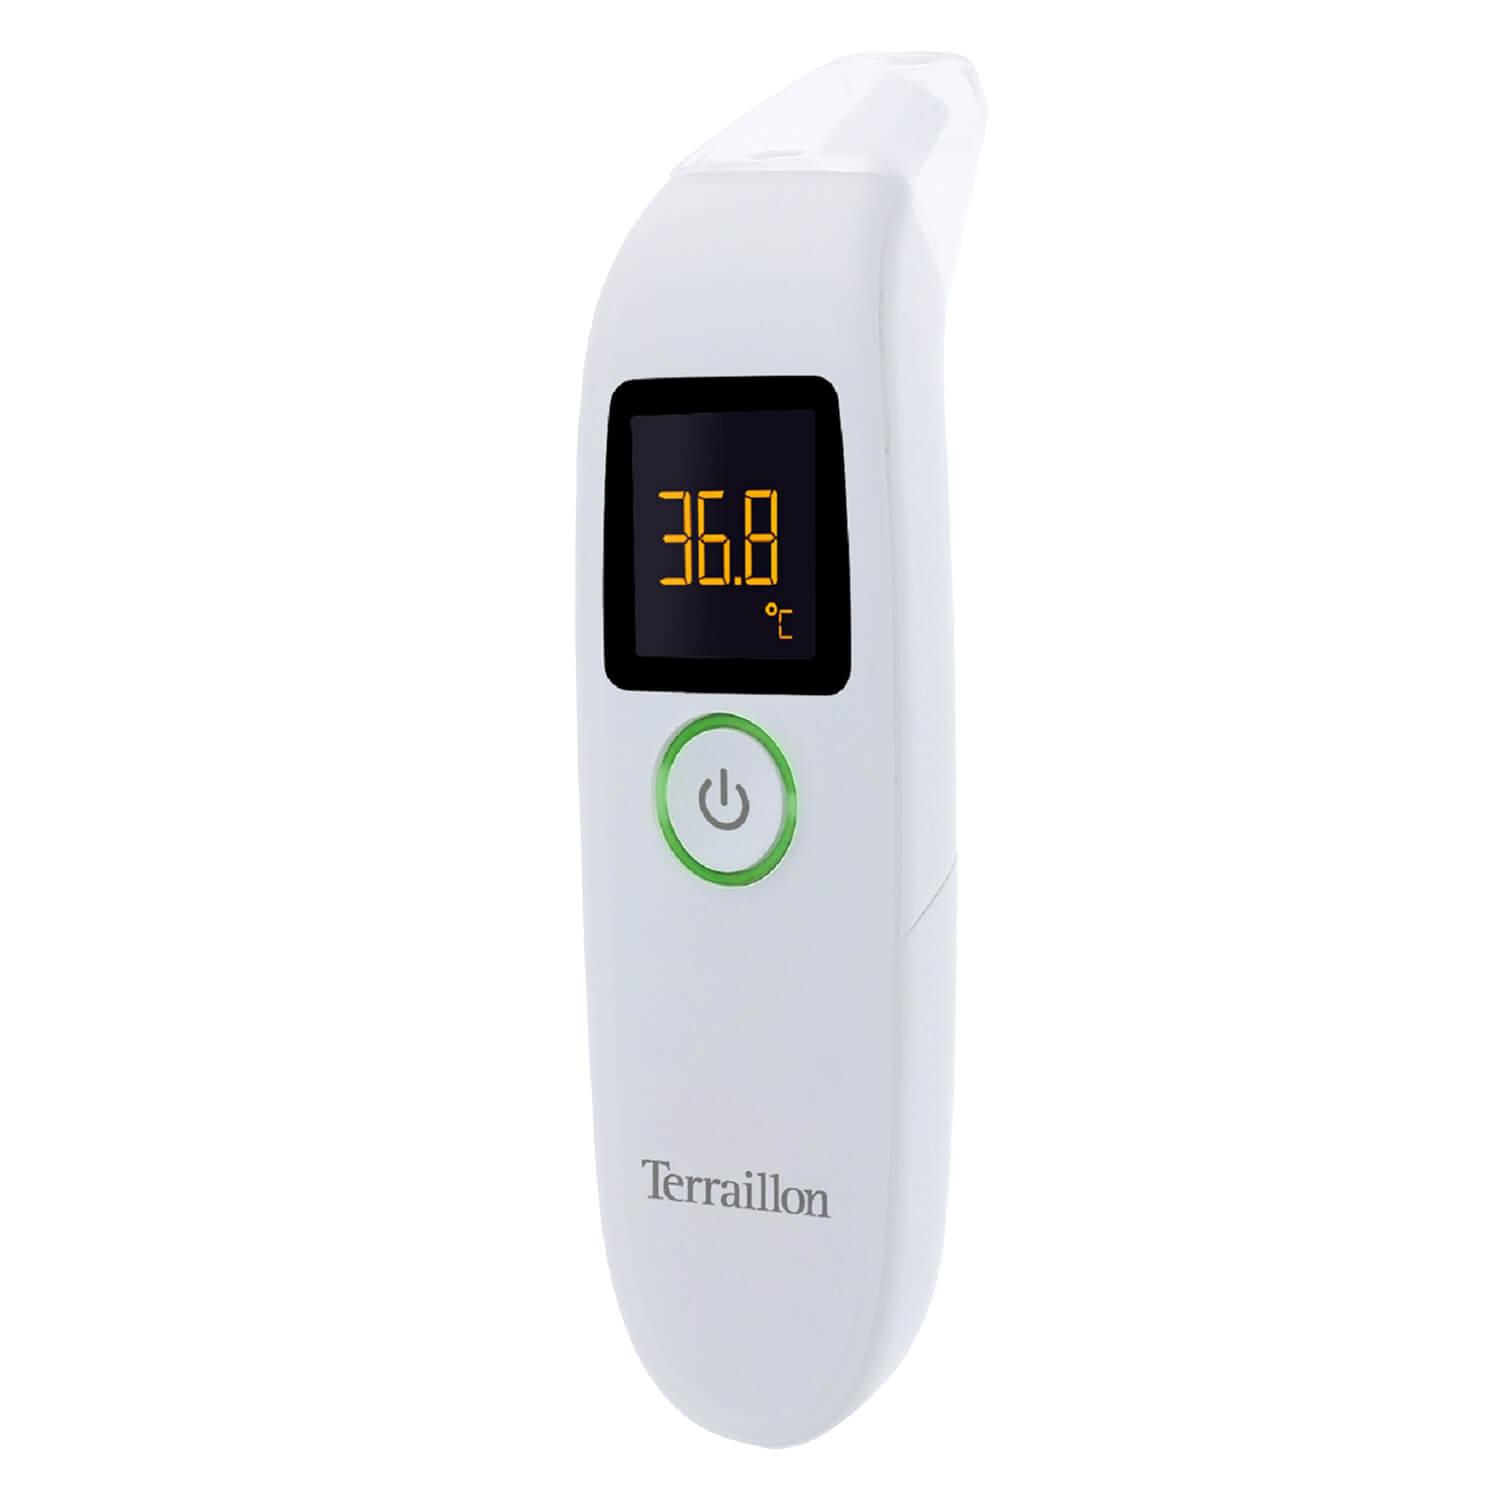 Terraillon - Infrarot Thermometer 3 in 1